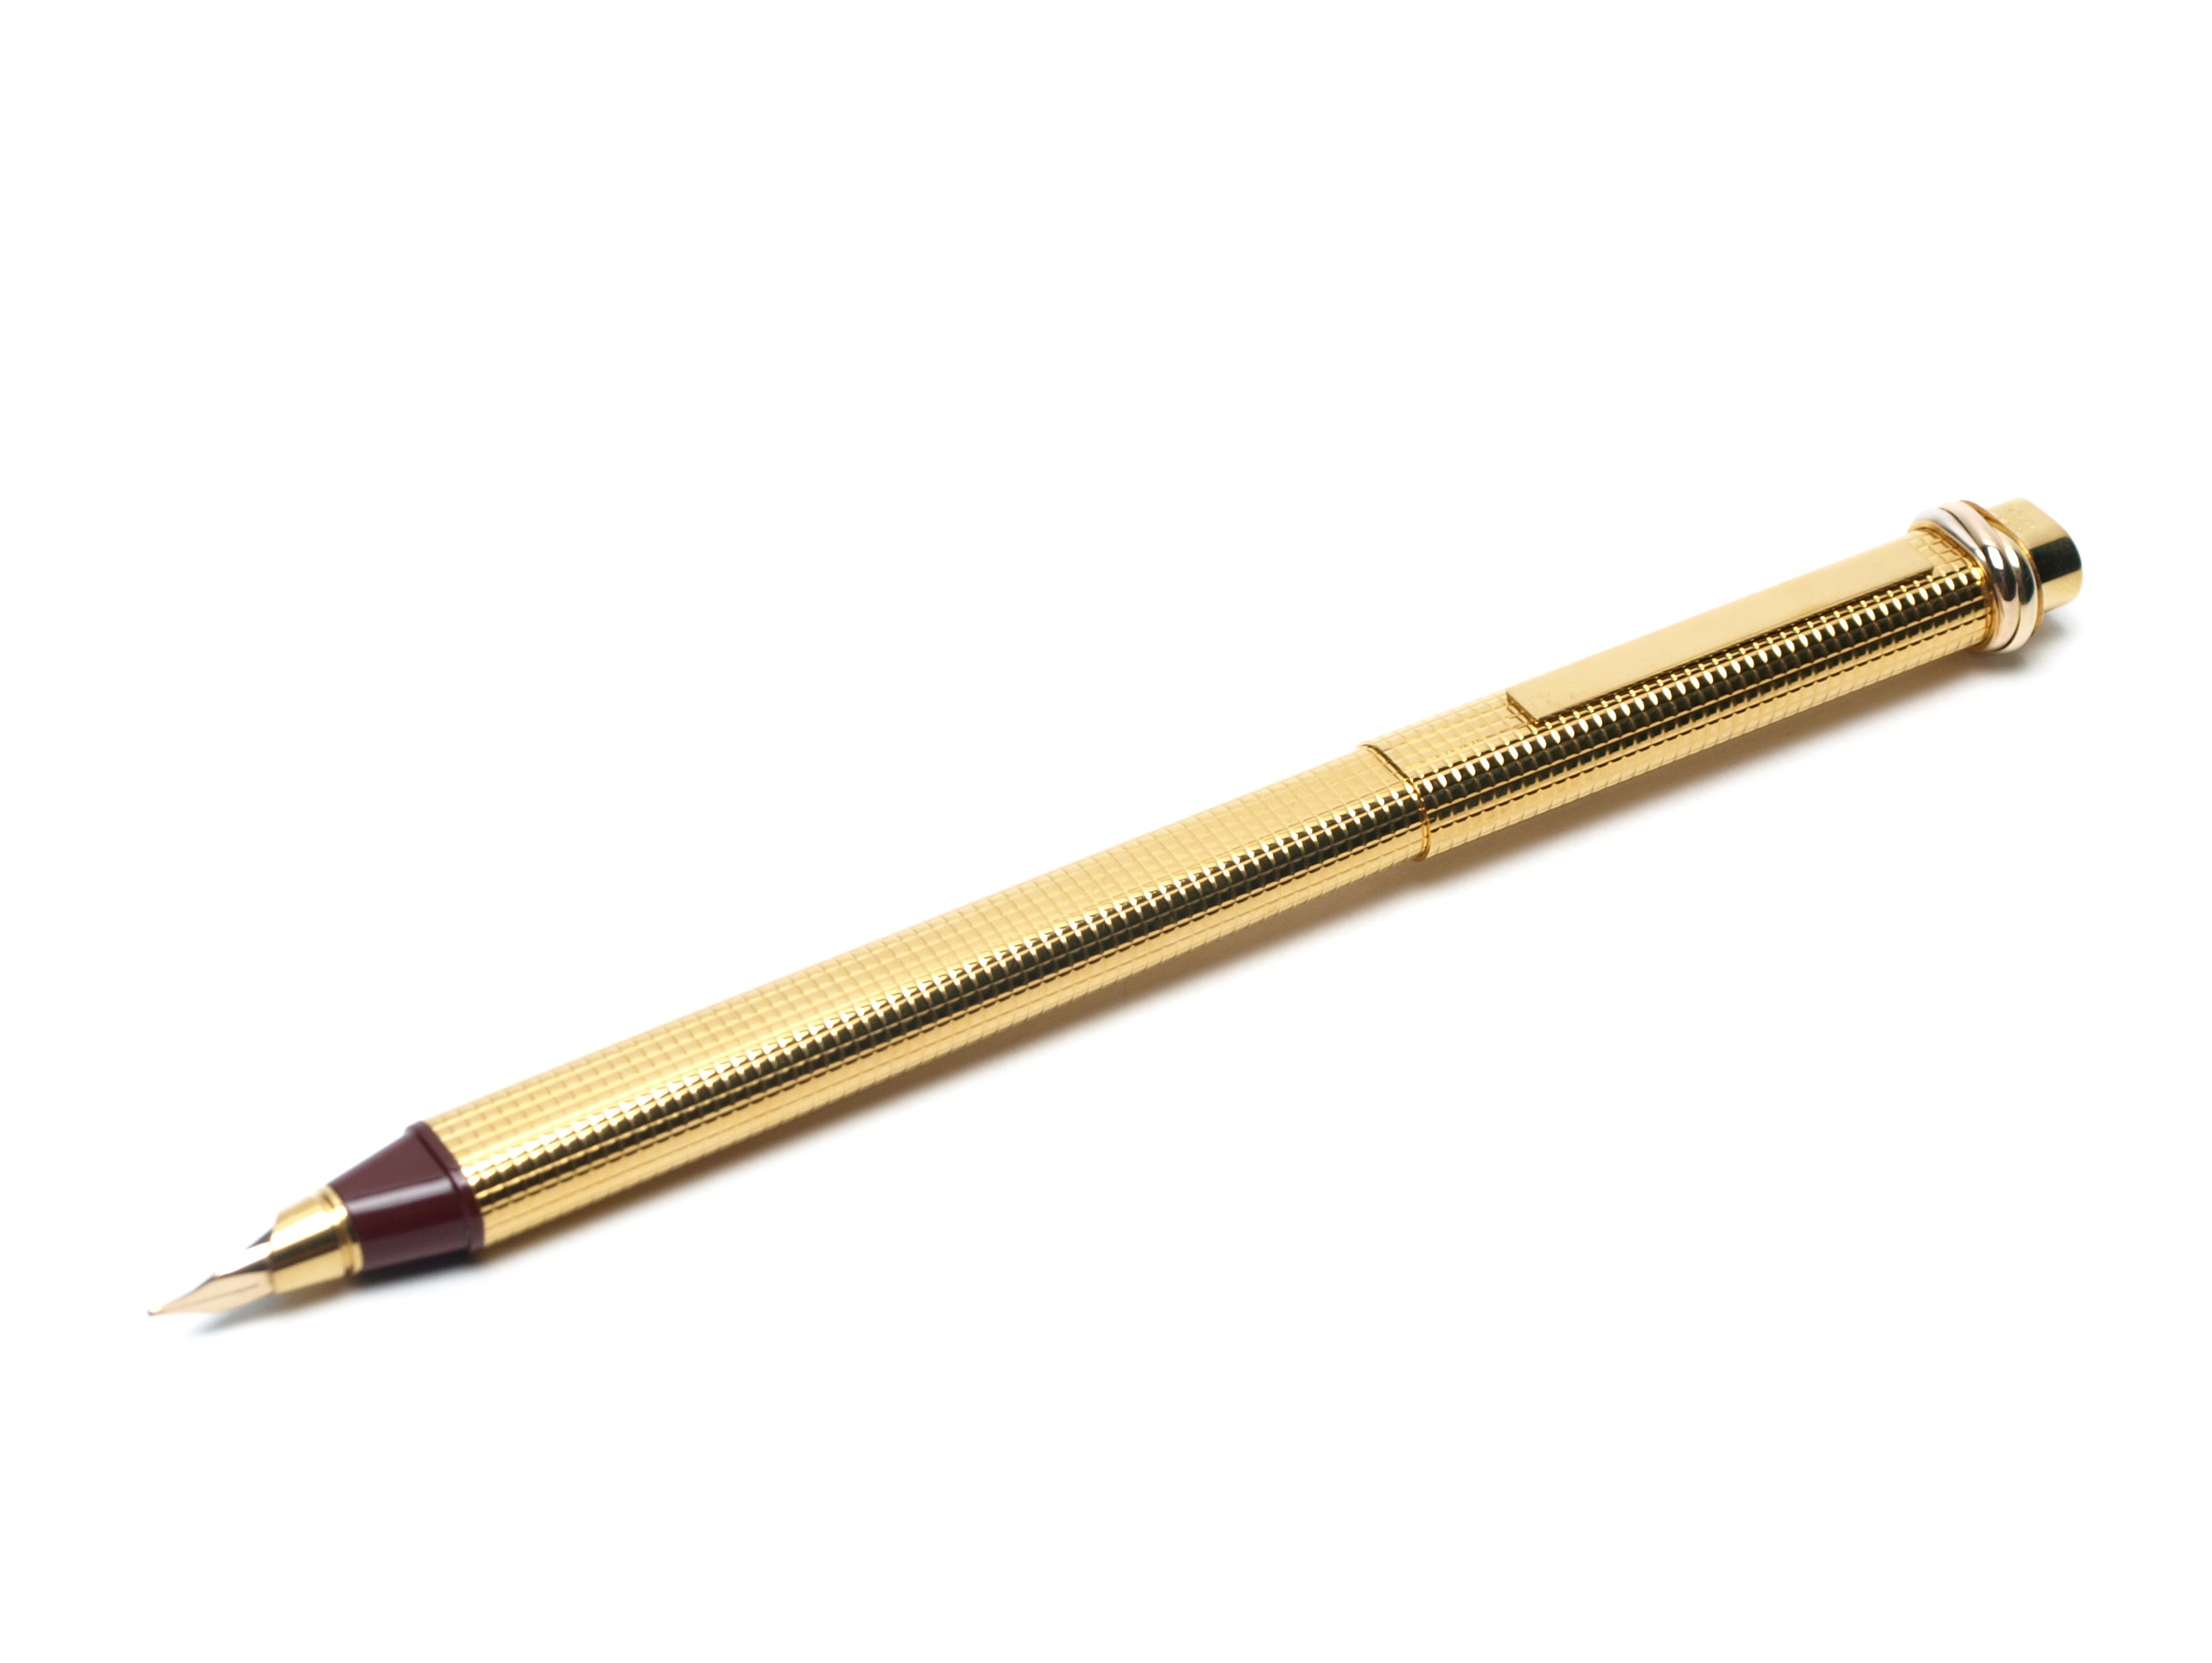 cartier vendome gold pen